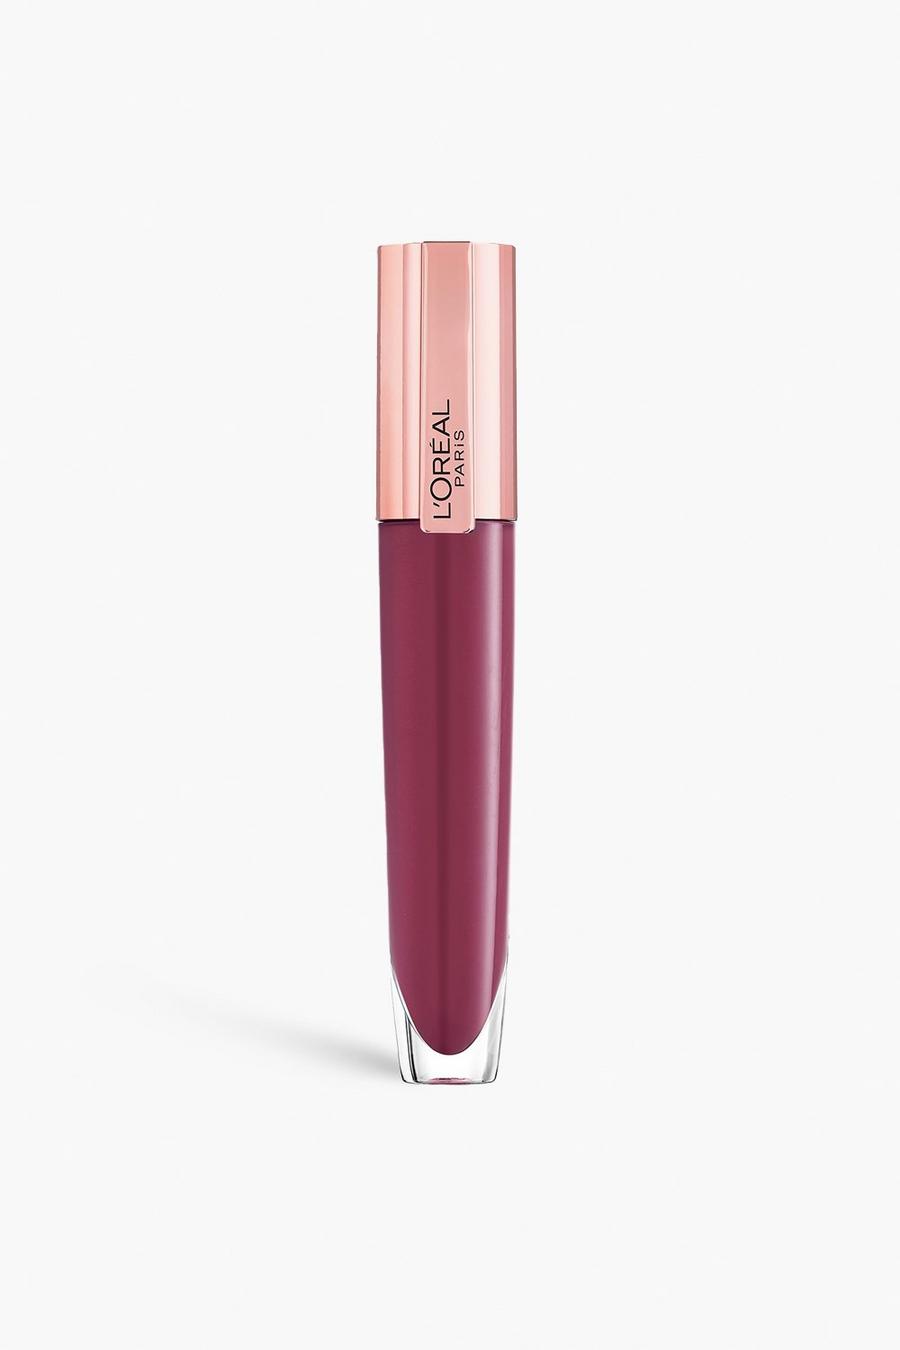 416 raise L'Oréal Paris Brilliant Signature Plumping Sheer Pink Lip Gloss 402